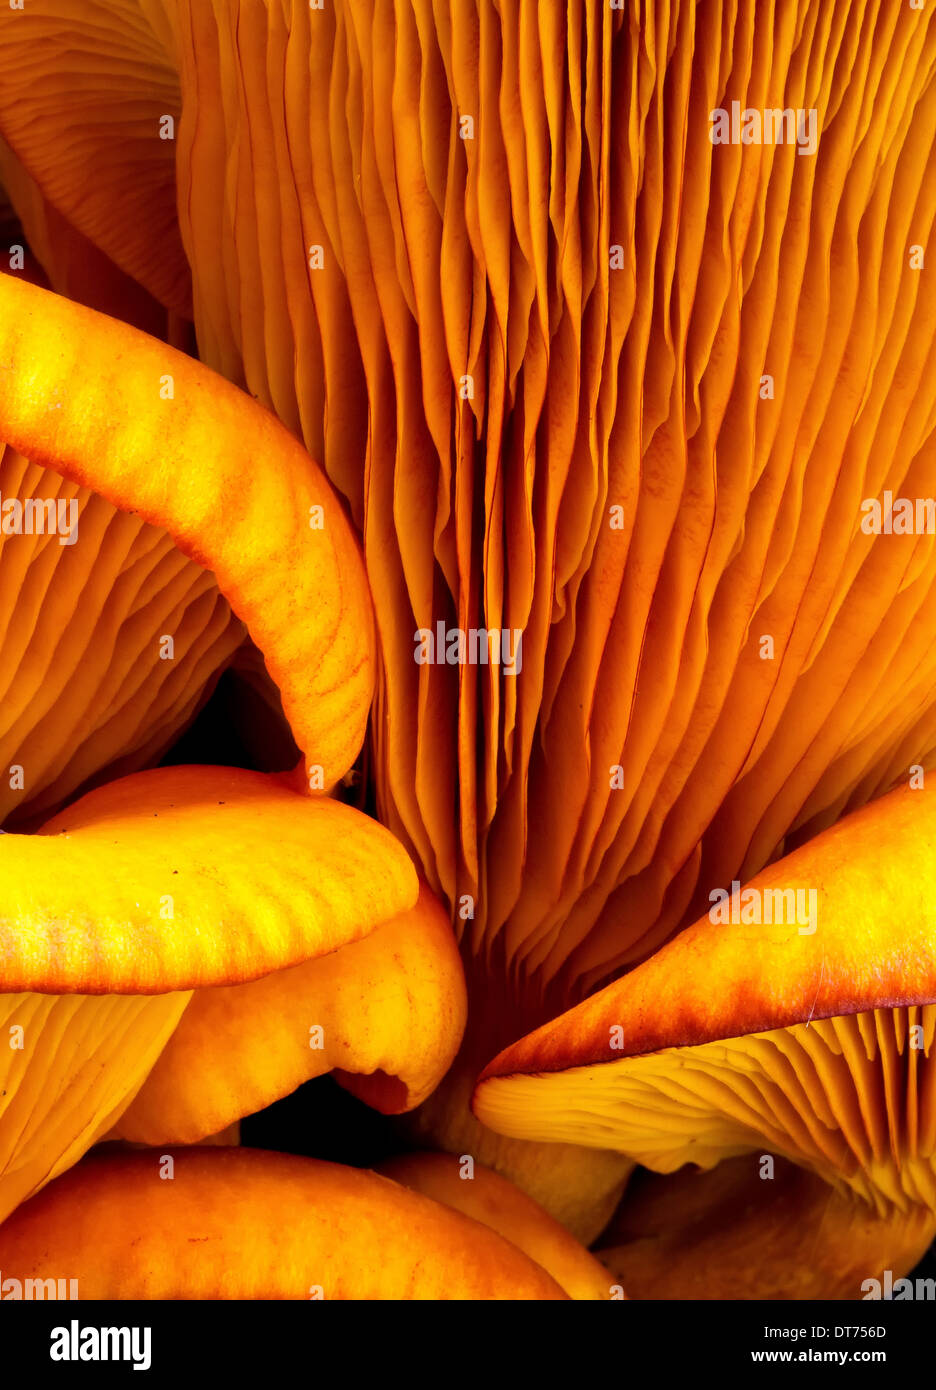 Close-up macro view of orange mushrooms found in Northeast Florida. Stock Photo